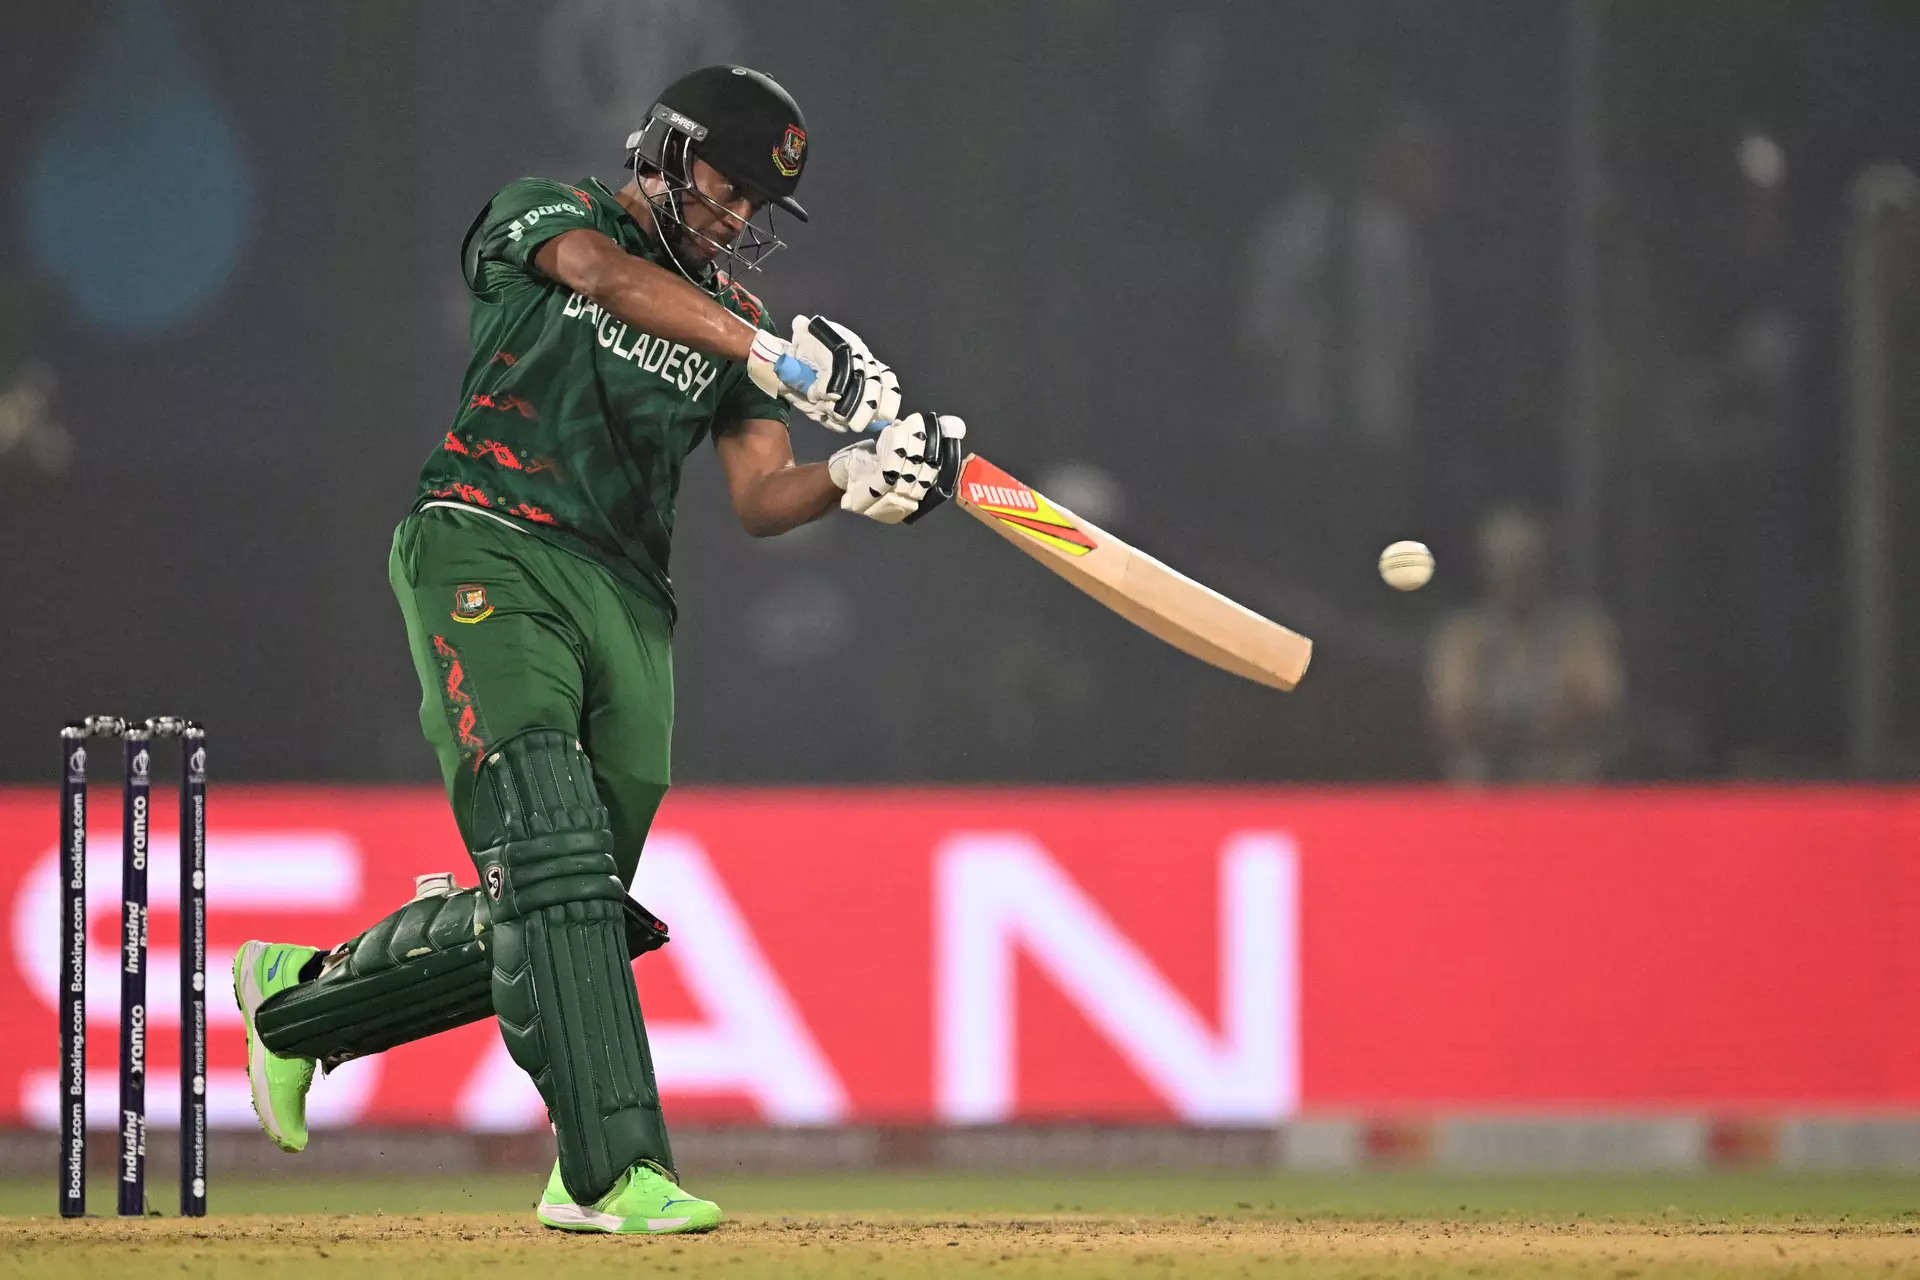 Bangladesh's captain Shakib Al Hasan plays a shot during the match against Sri Lanka. (AFP Photo)